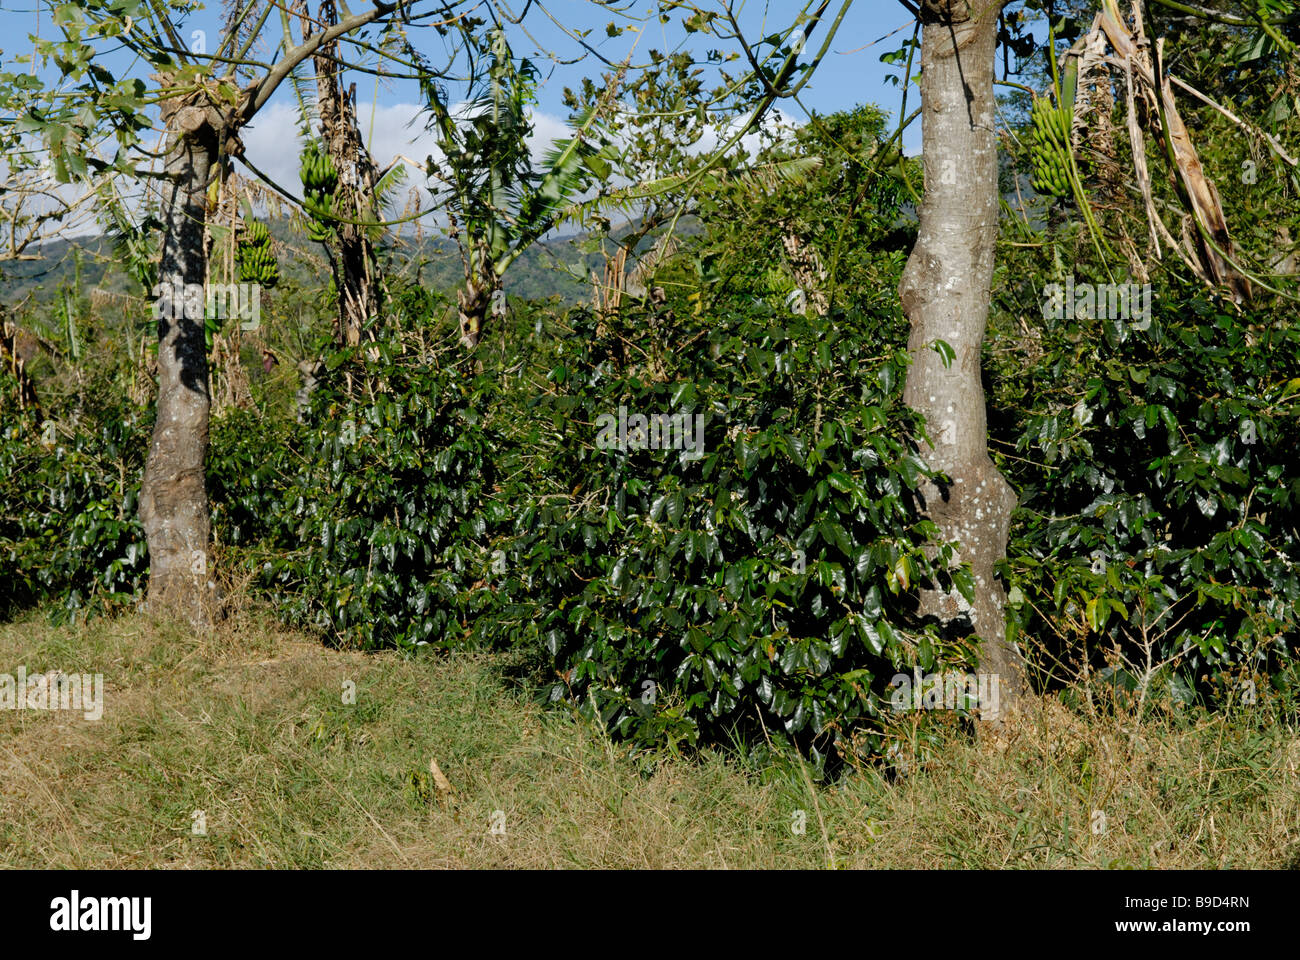 Shade grown coffee plantation Stock Photo